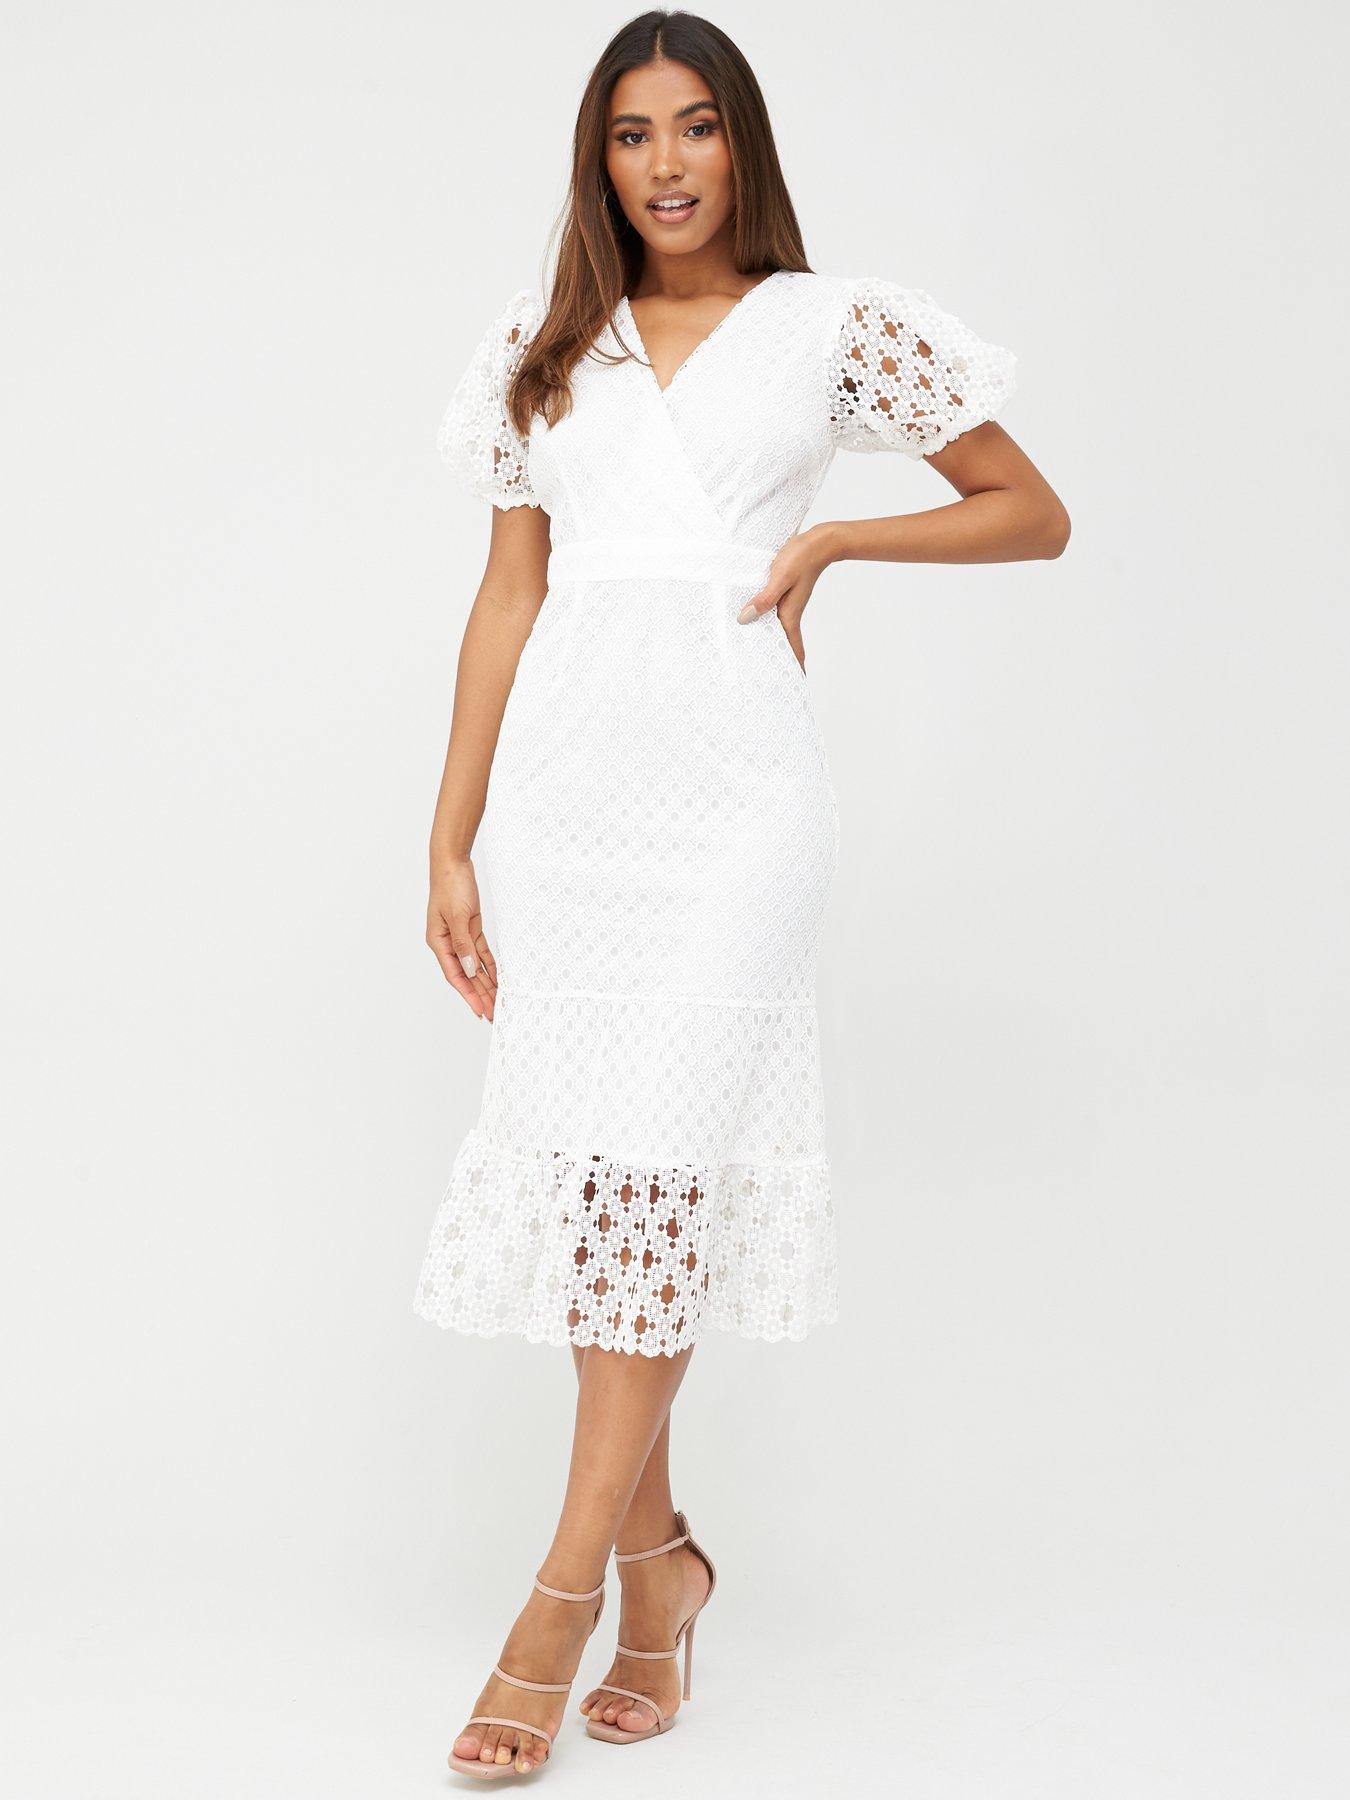 white dress uk